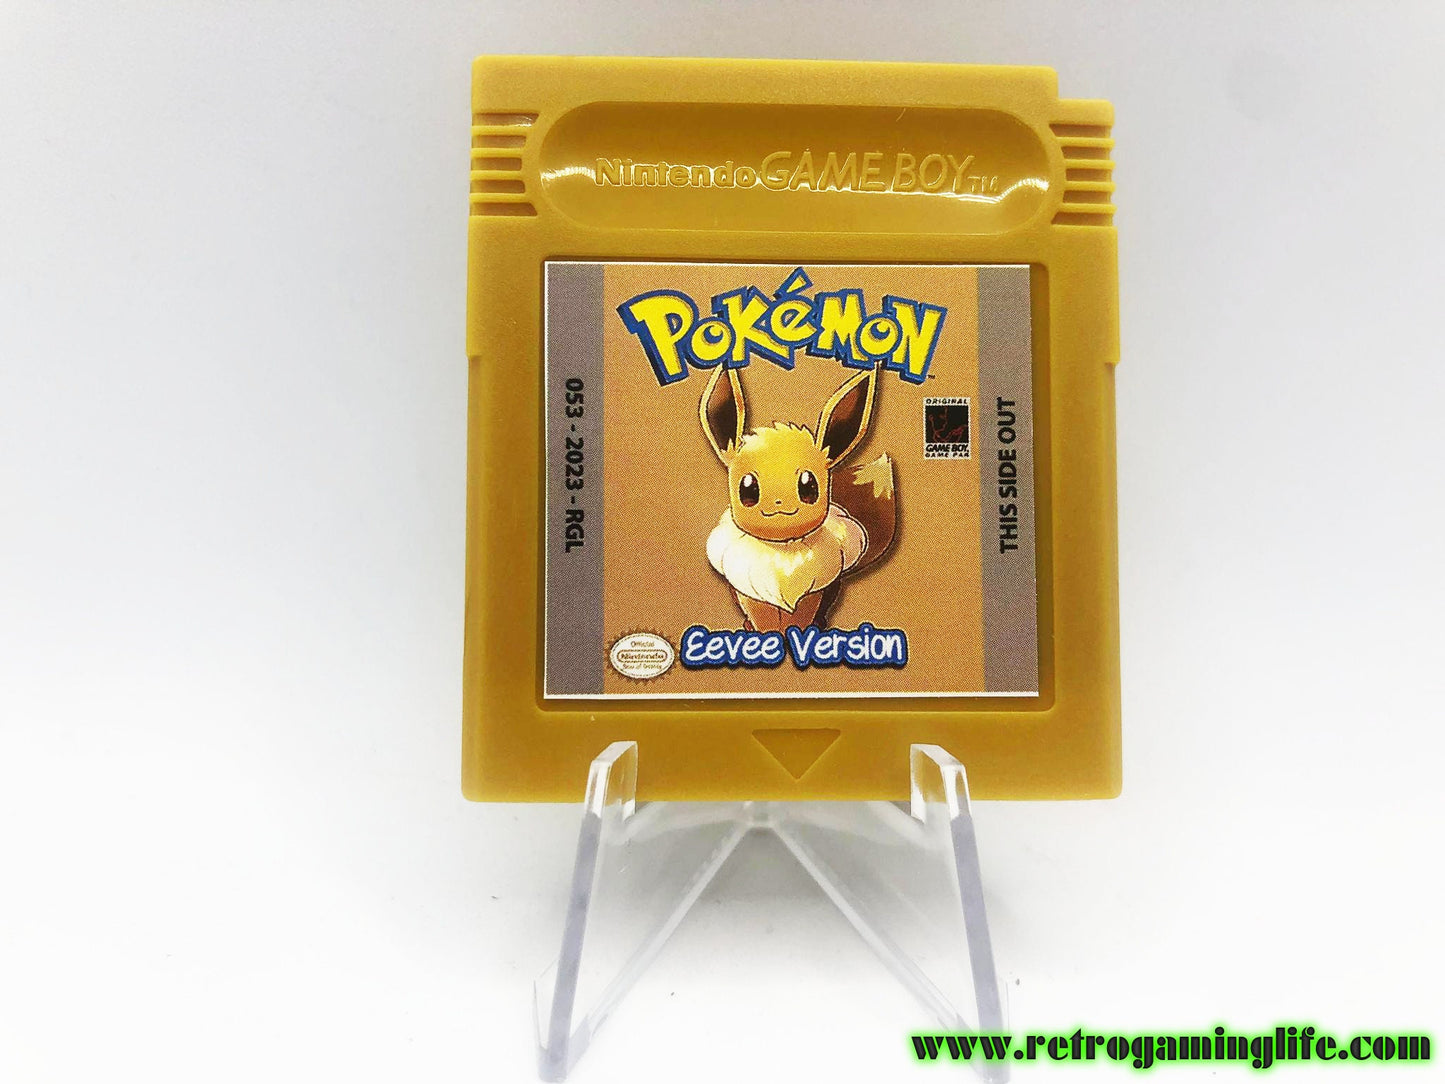 Pokemon Eevee Edition Repro Gameboy Game Cart